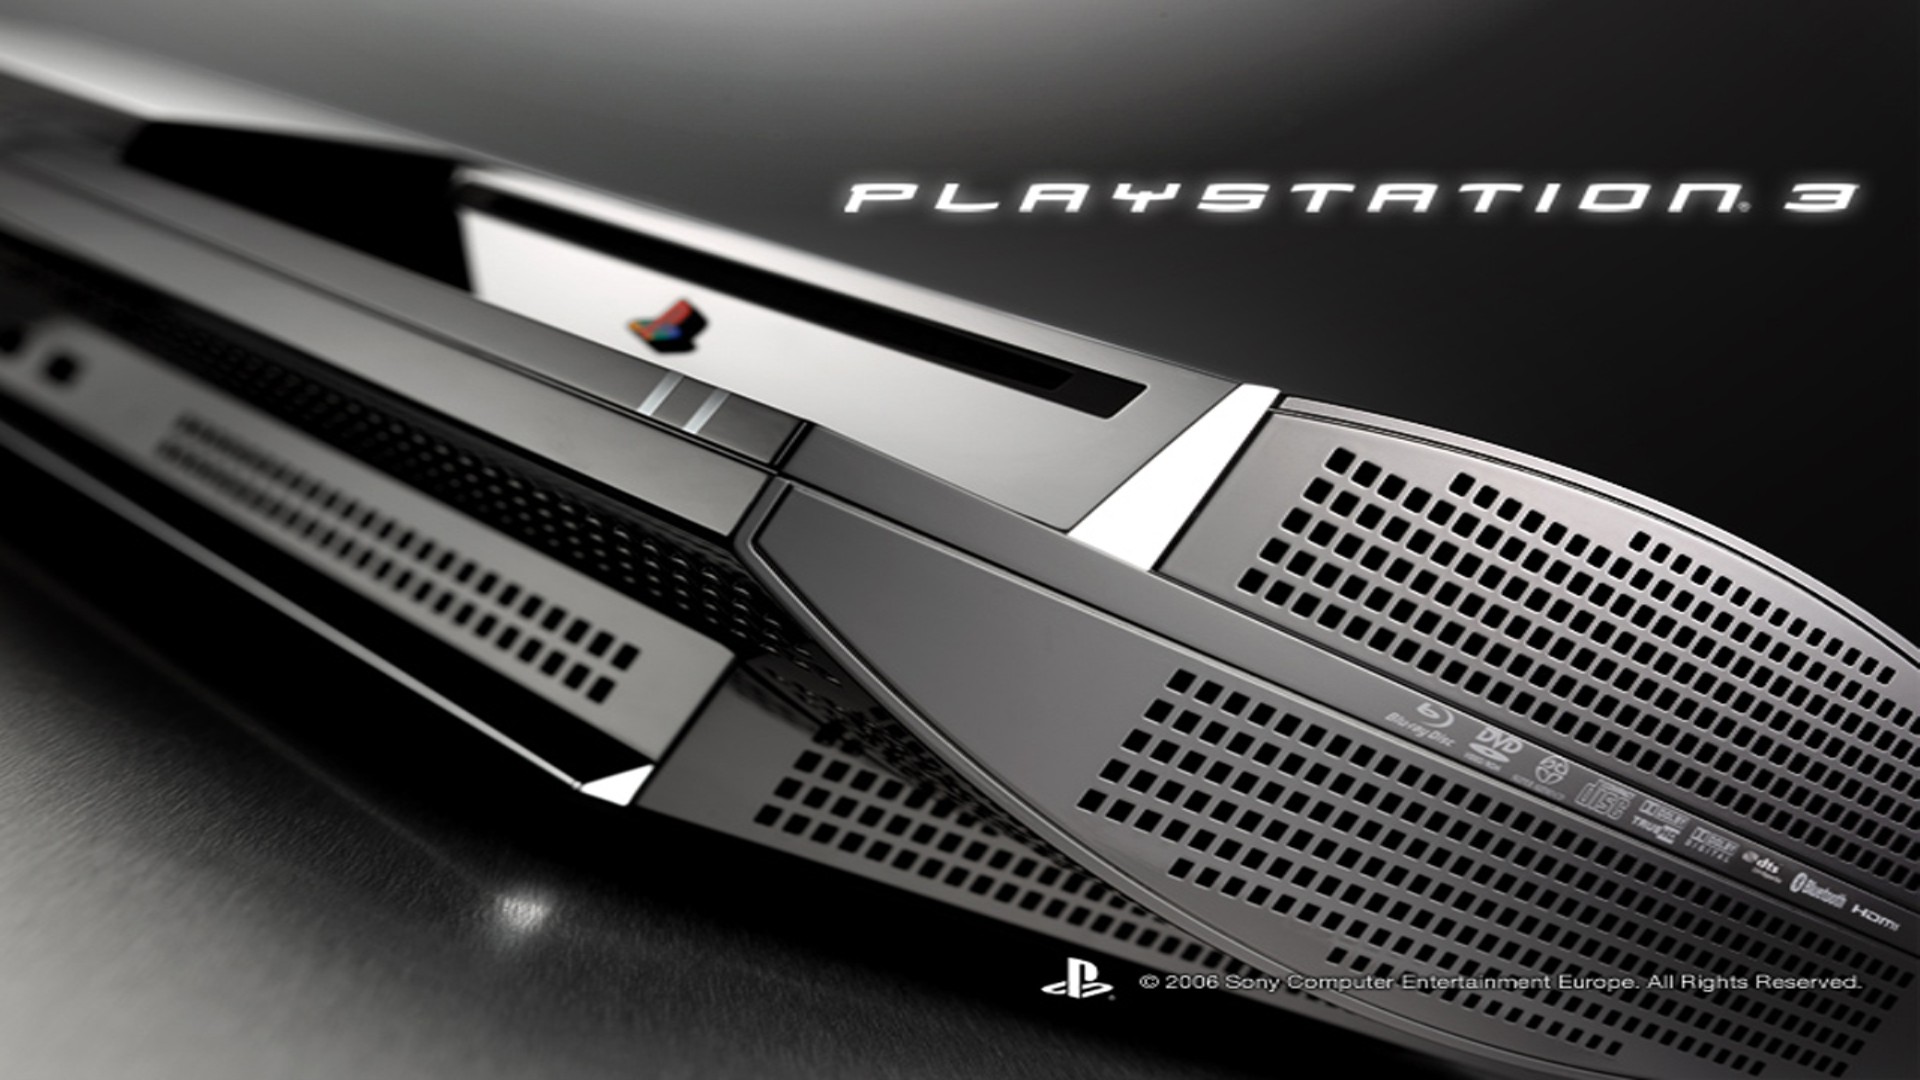 Playstation 3, video game consoles - desktop wallpaper